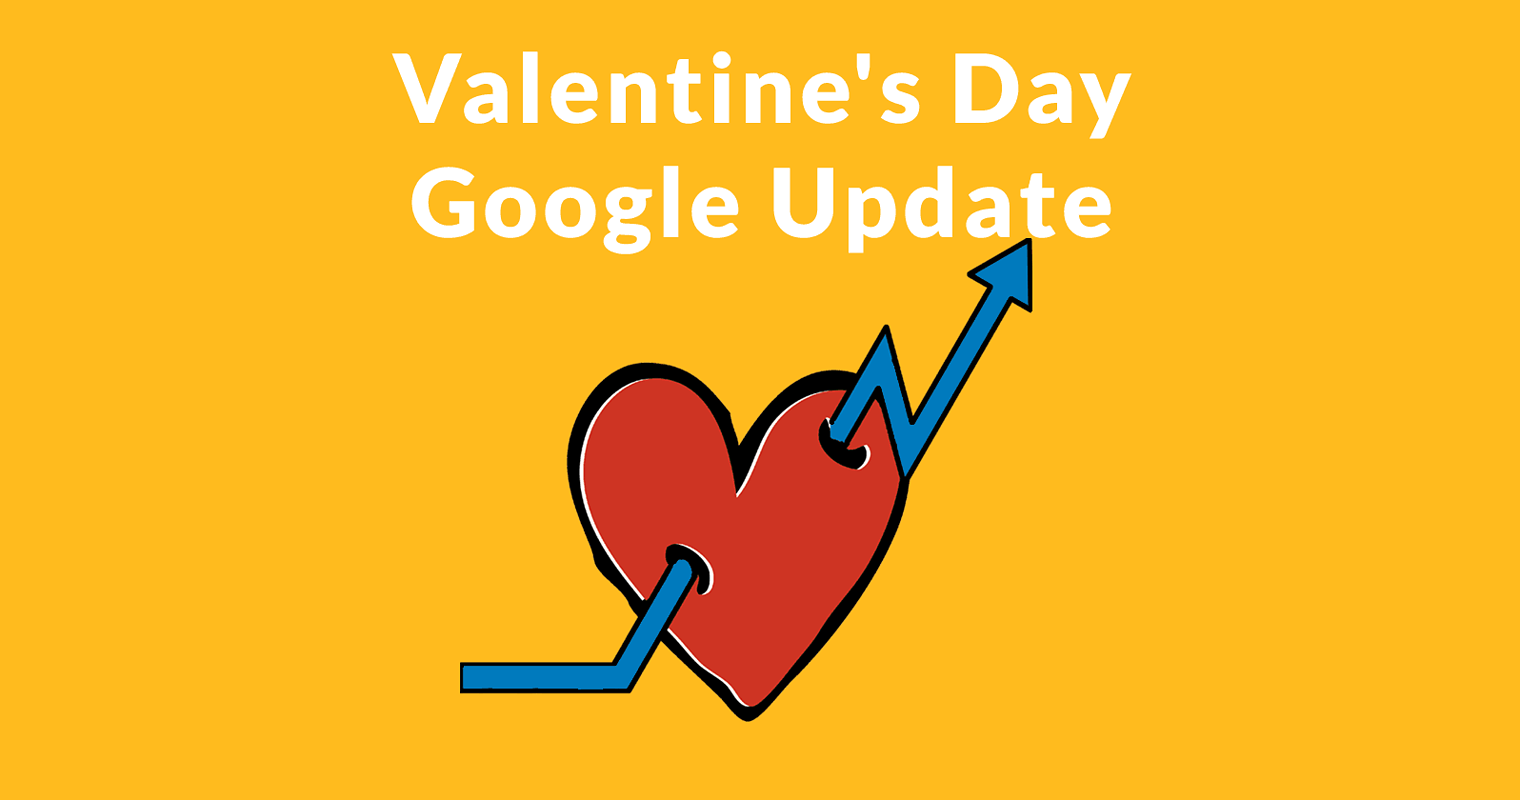 Evidence of Google Valentine’s Day Algorithm Update